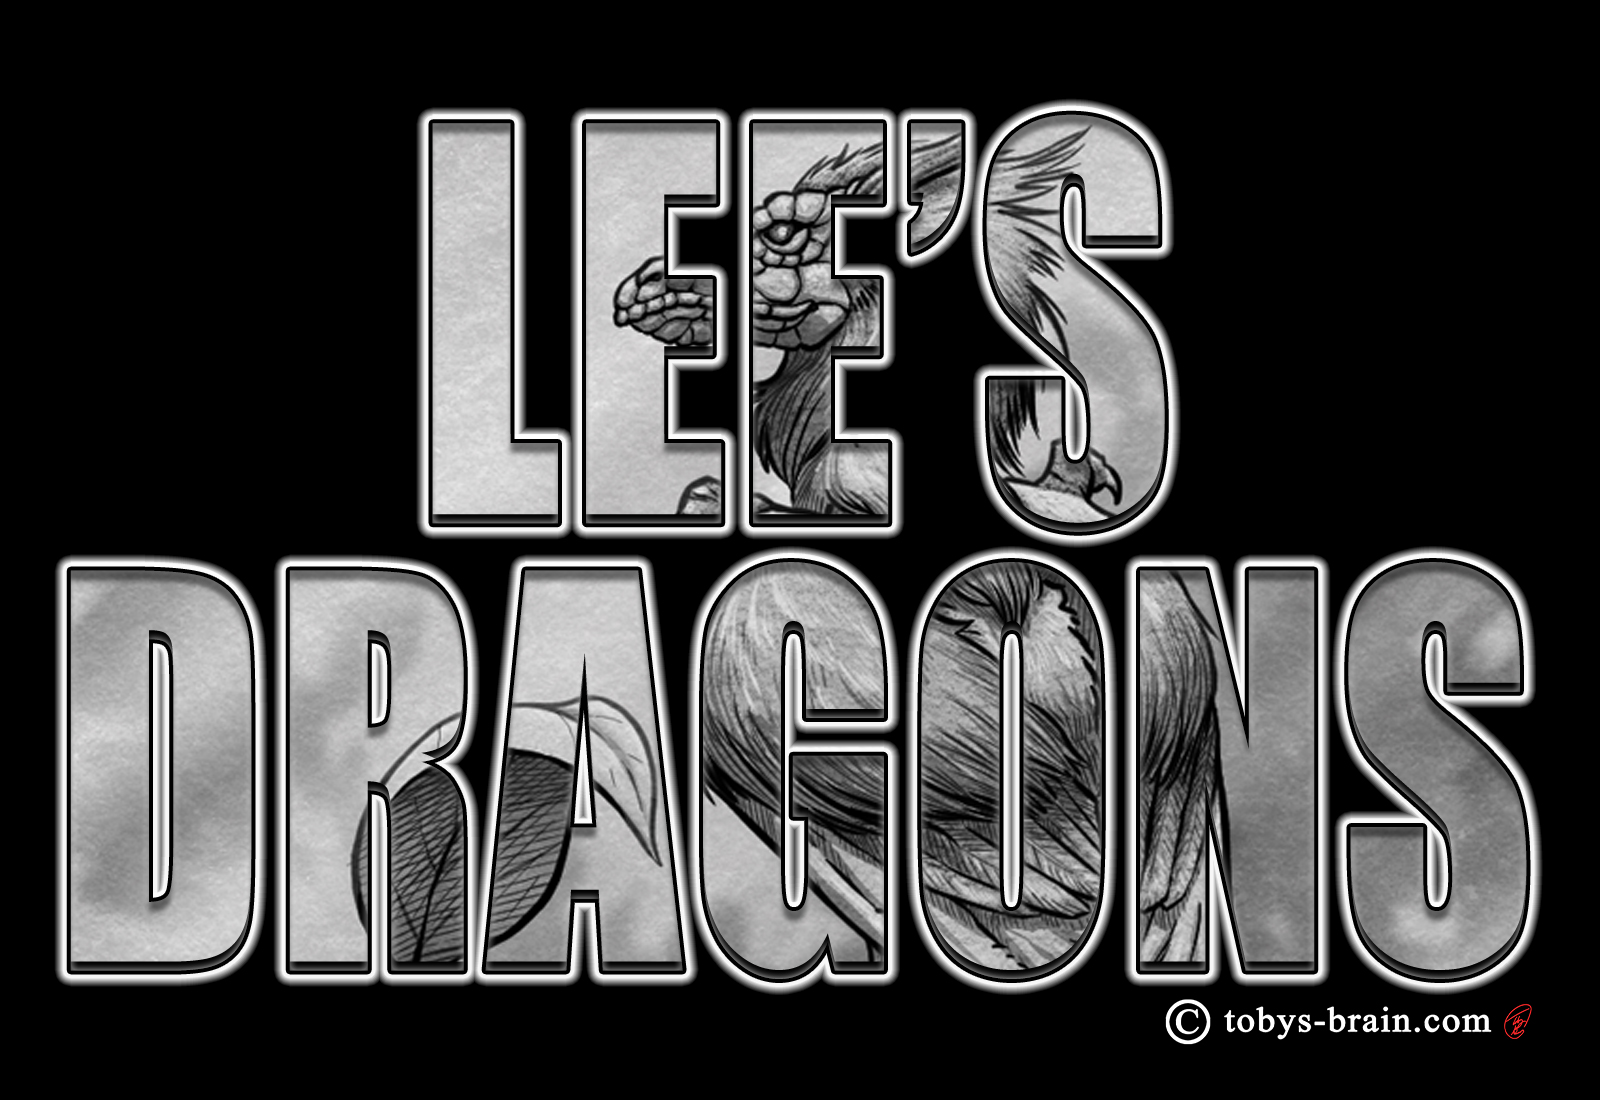 Lee’s Dragons: Bird Dragon